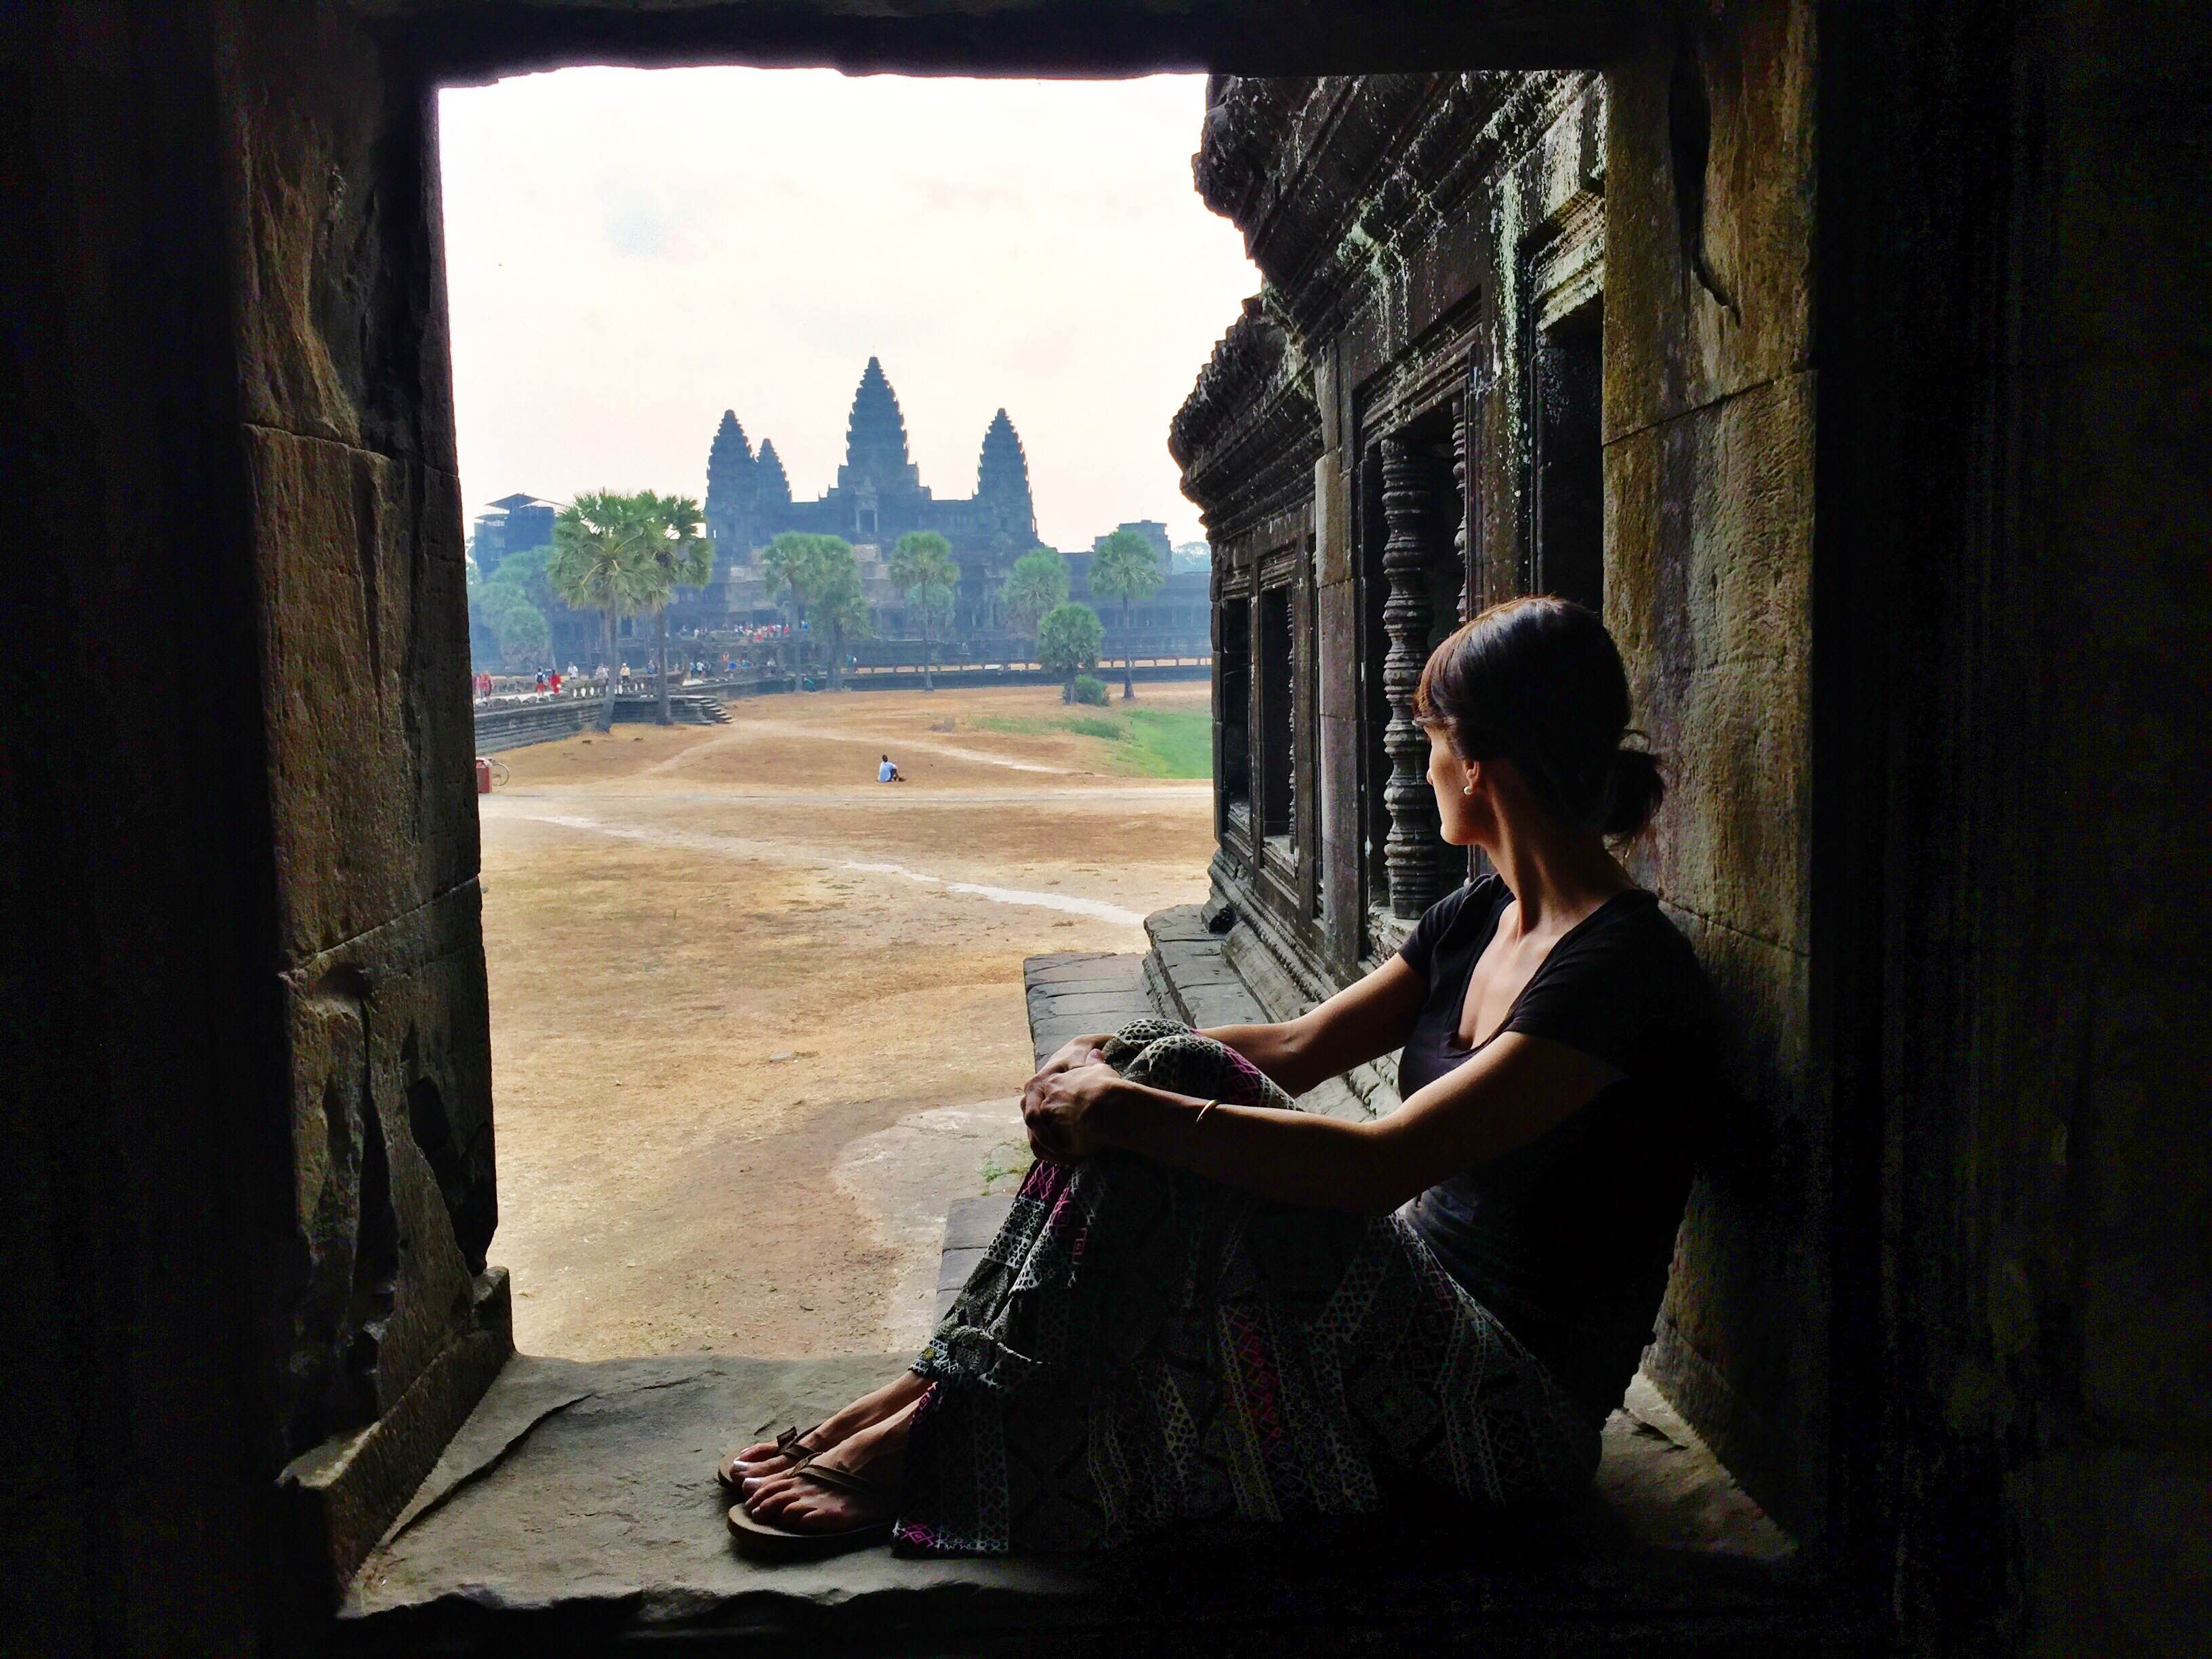 Cambodia: A Photo Journal